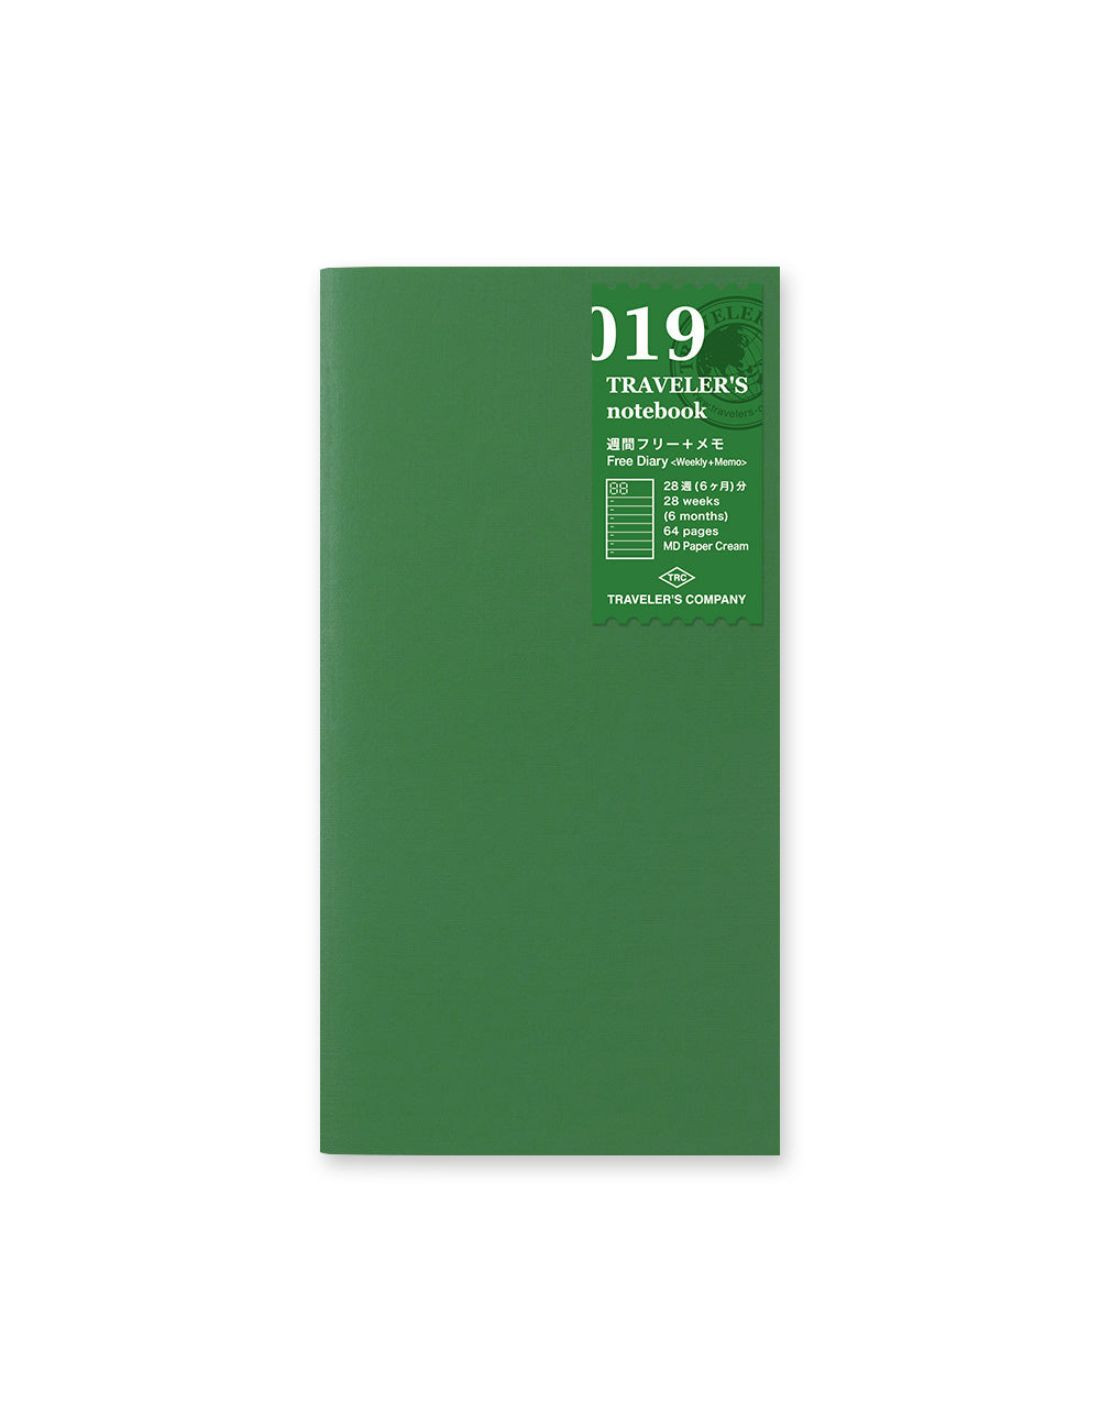 Refill 019 Free Diary (Weekly + Memo) - TRAVELER'S notebook